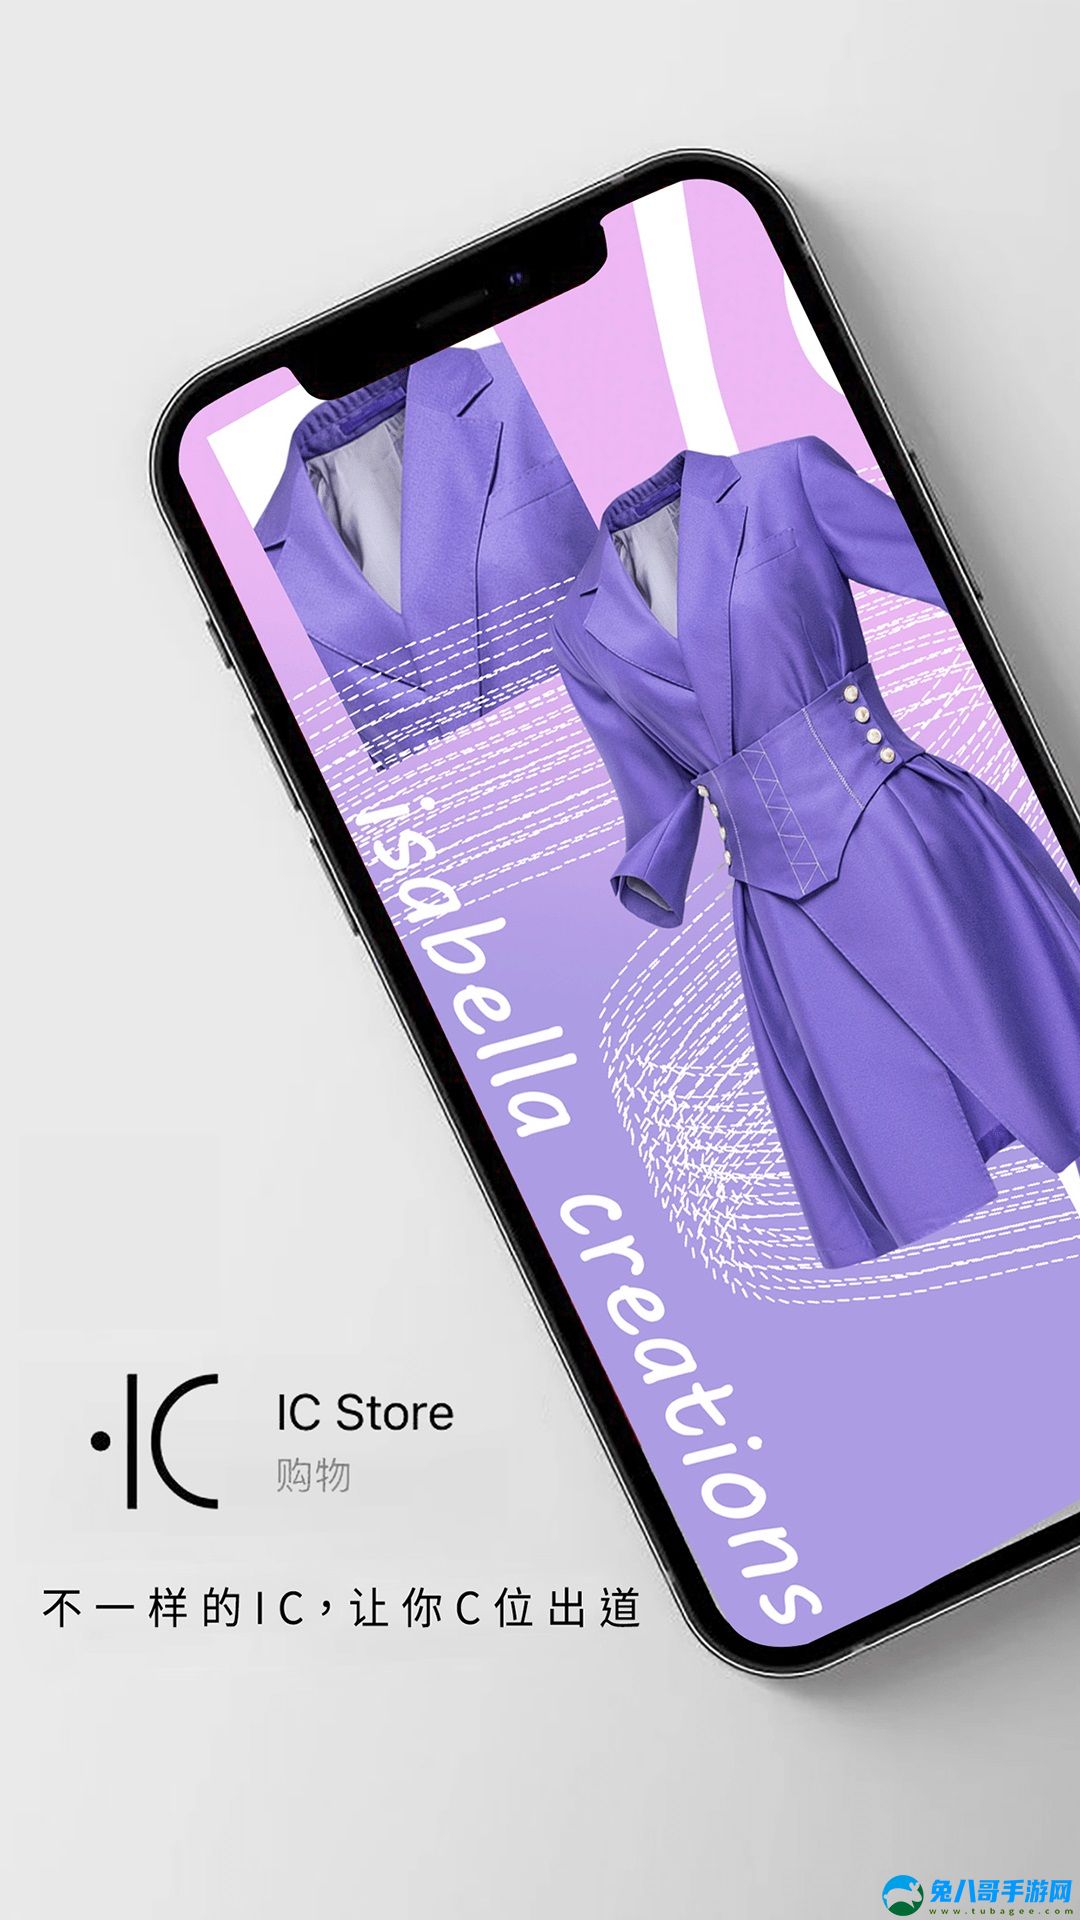 IC Store